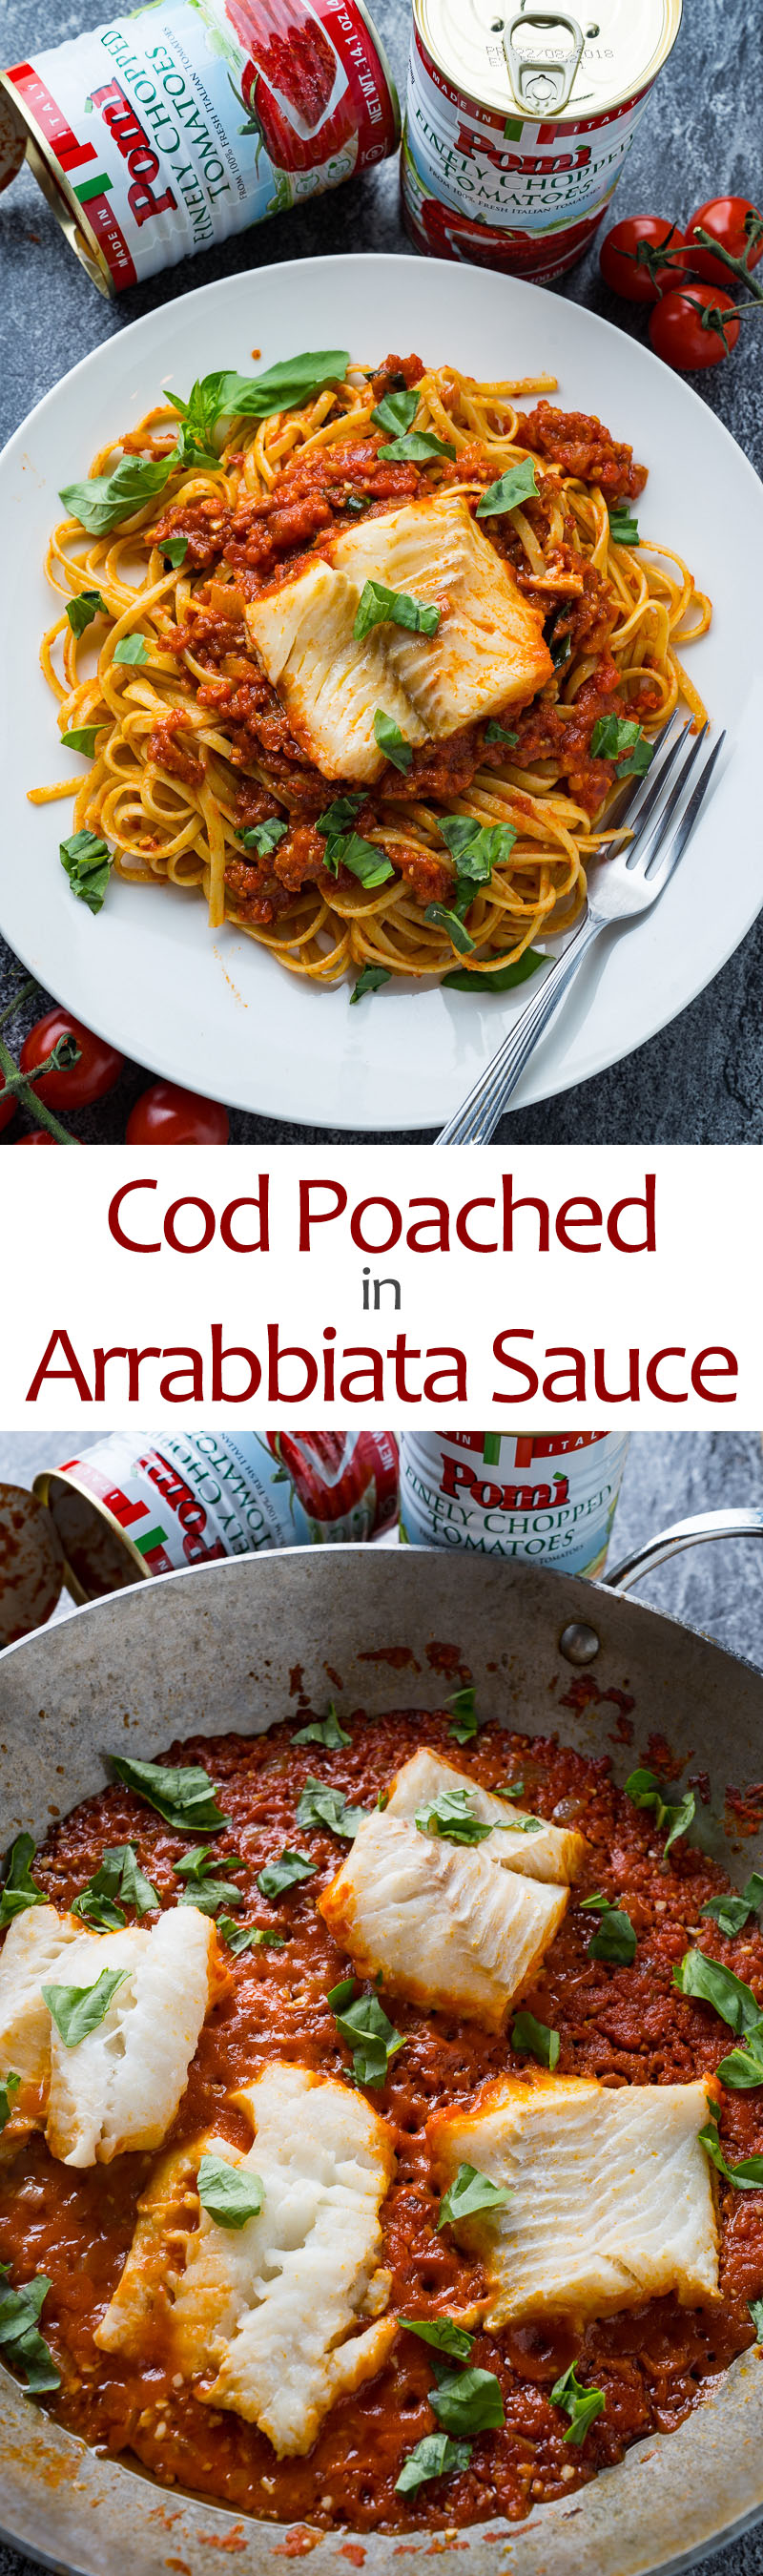 Cod Poached in Arrabbiata Sauce